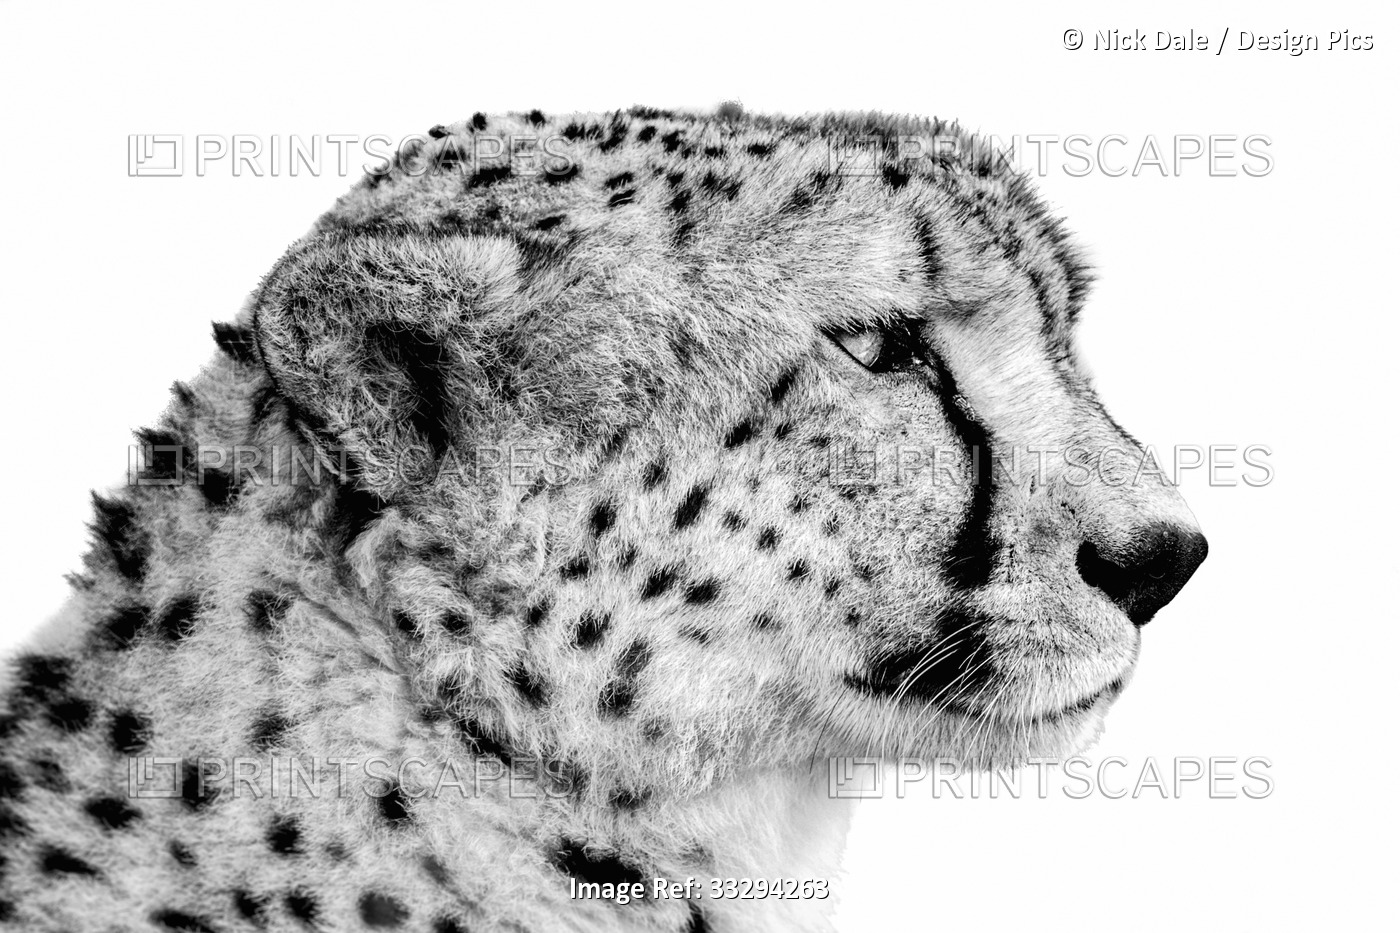 Black and white portrait of a close-up of a cheetah (Acinonyx jubatus) head ...